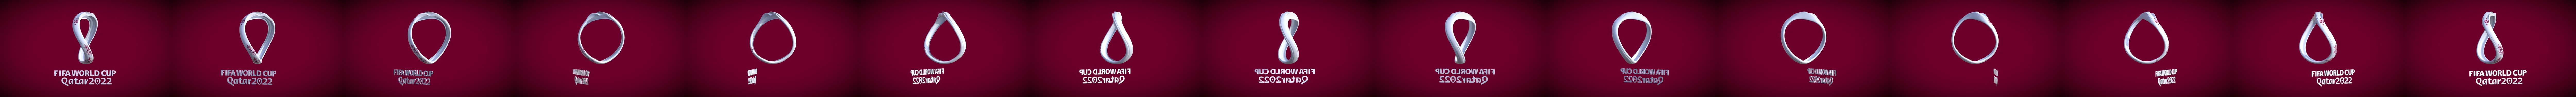 Qatar 2022 Logo Fifa Worldcup - 3D Model by rfarencibia